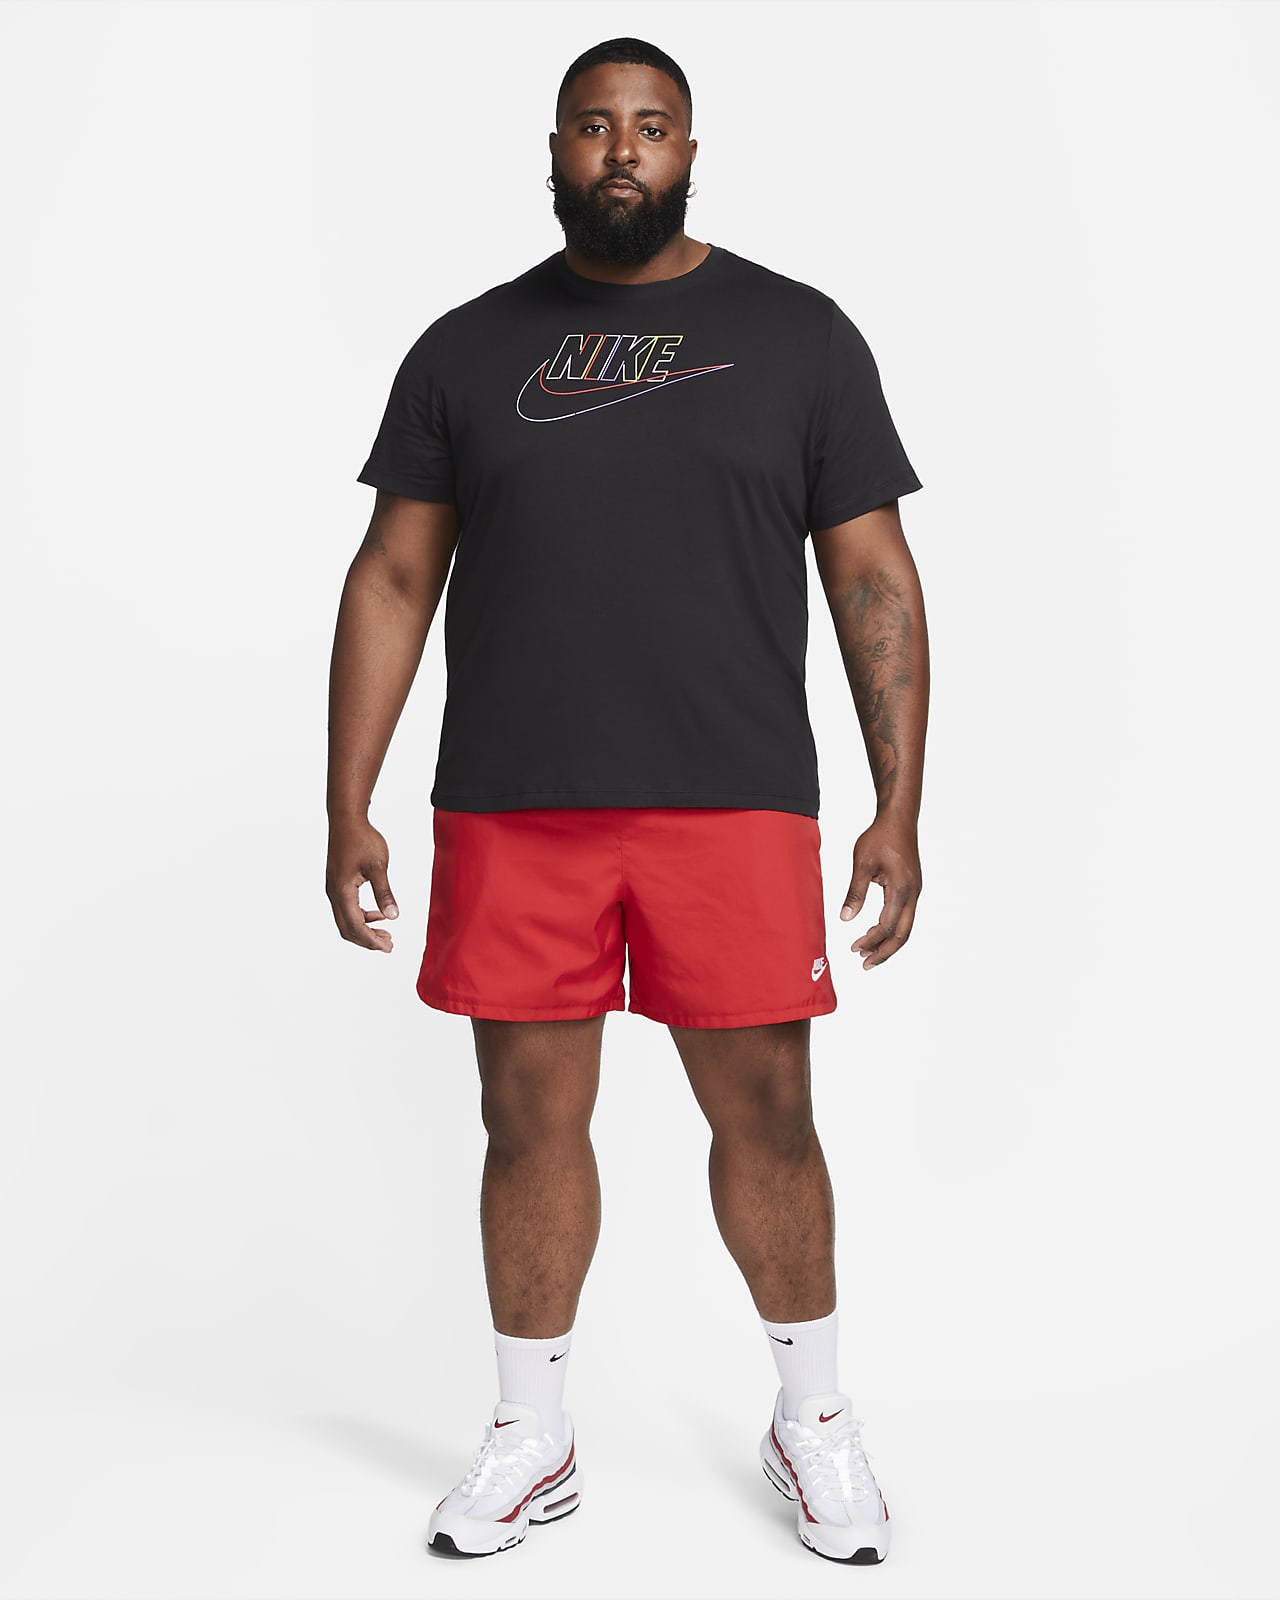 Women's Plus Size Training & Gym Tops & T-Shirts. Nike CA